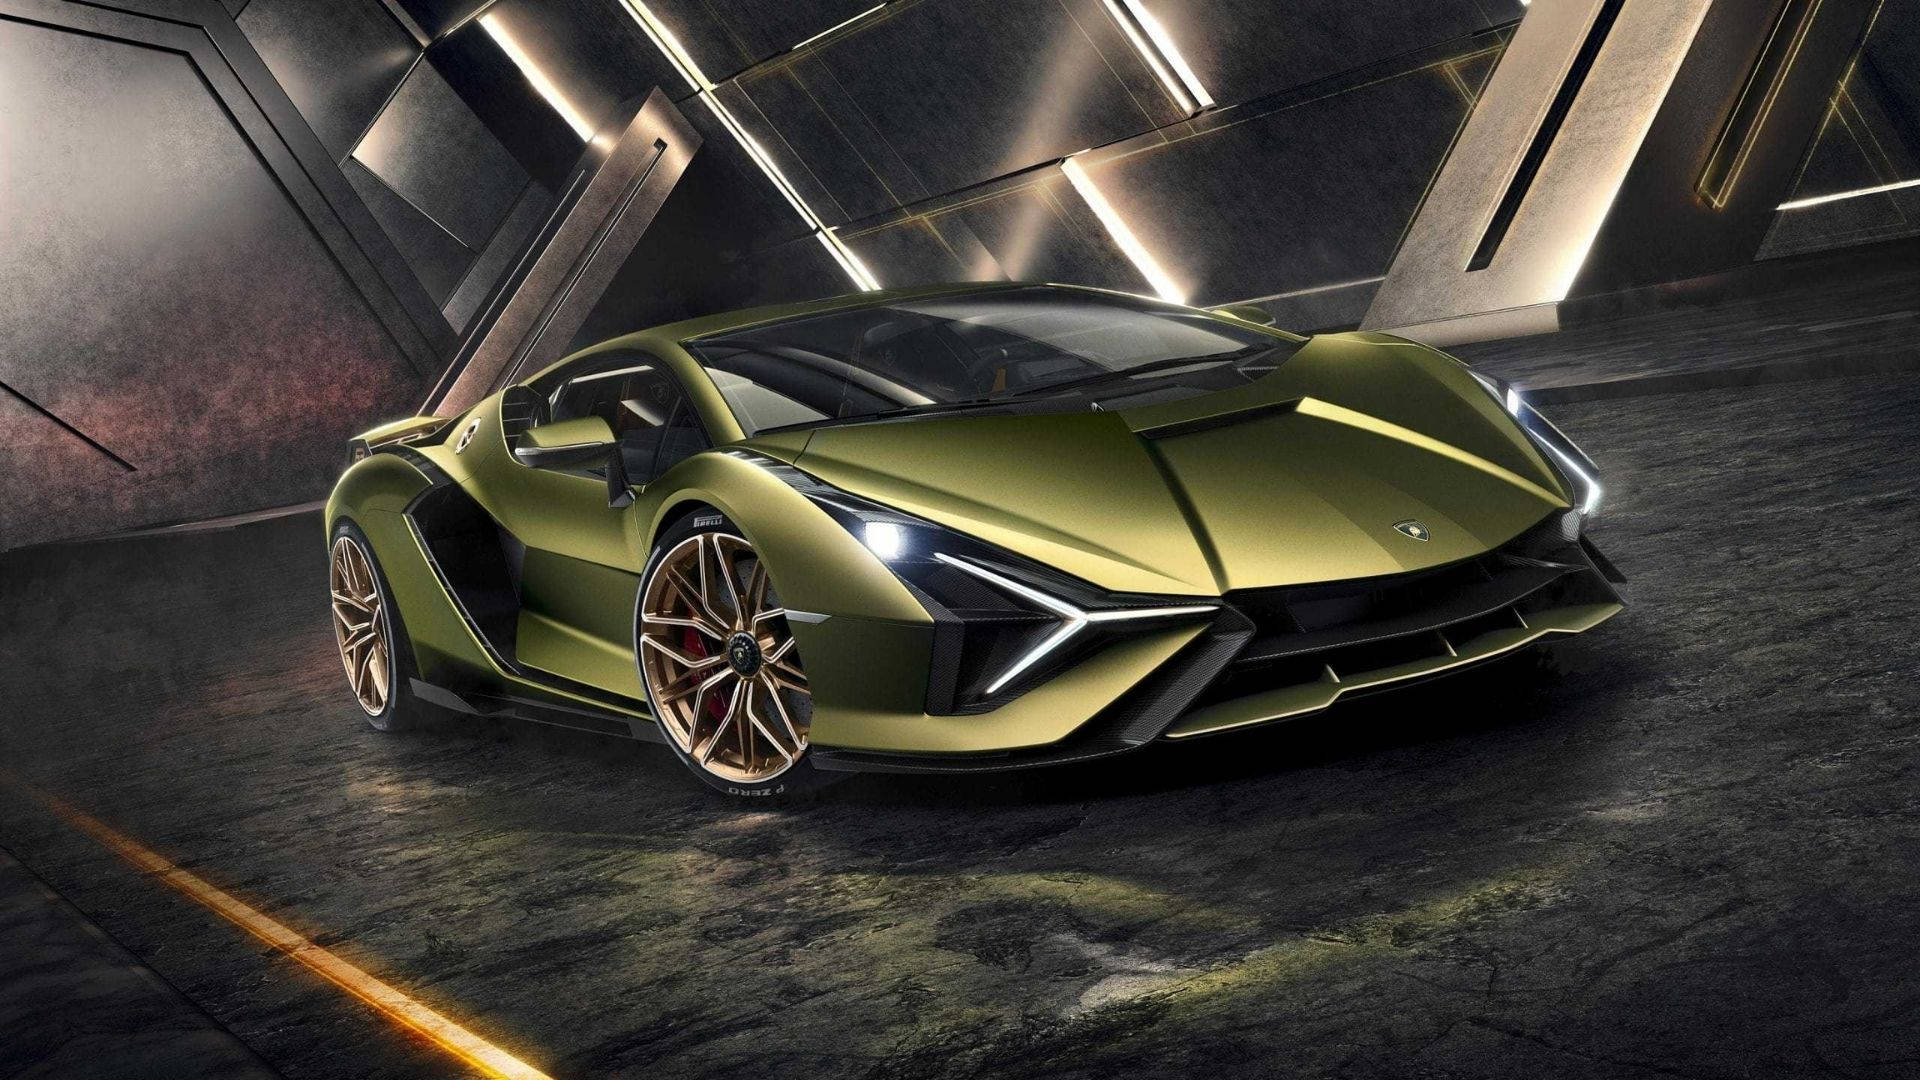 Army Green Lamborghini Aventador Background